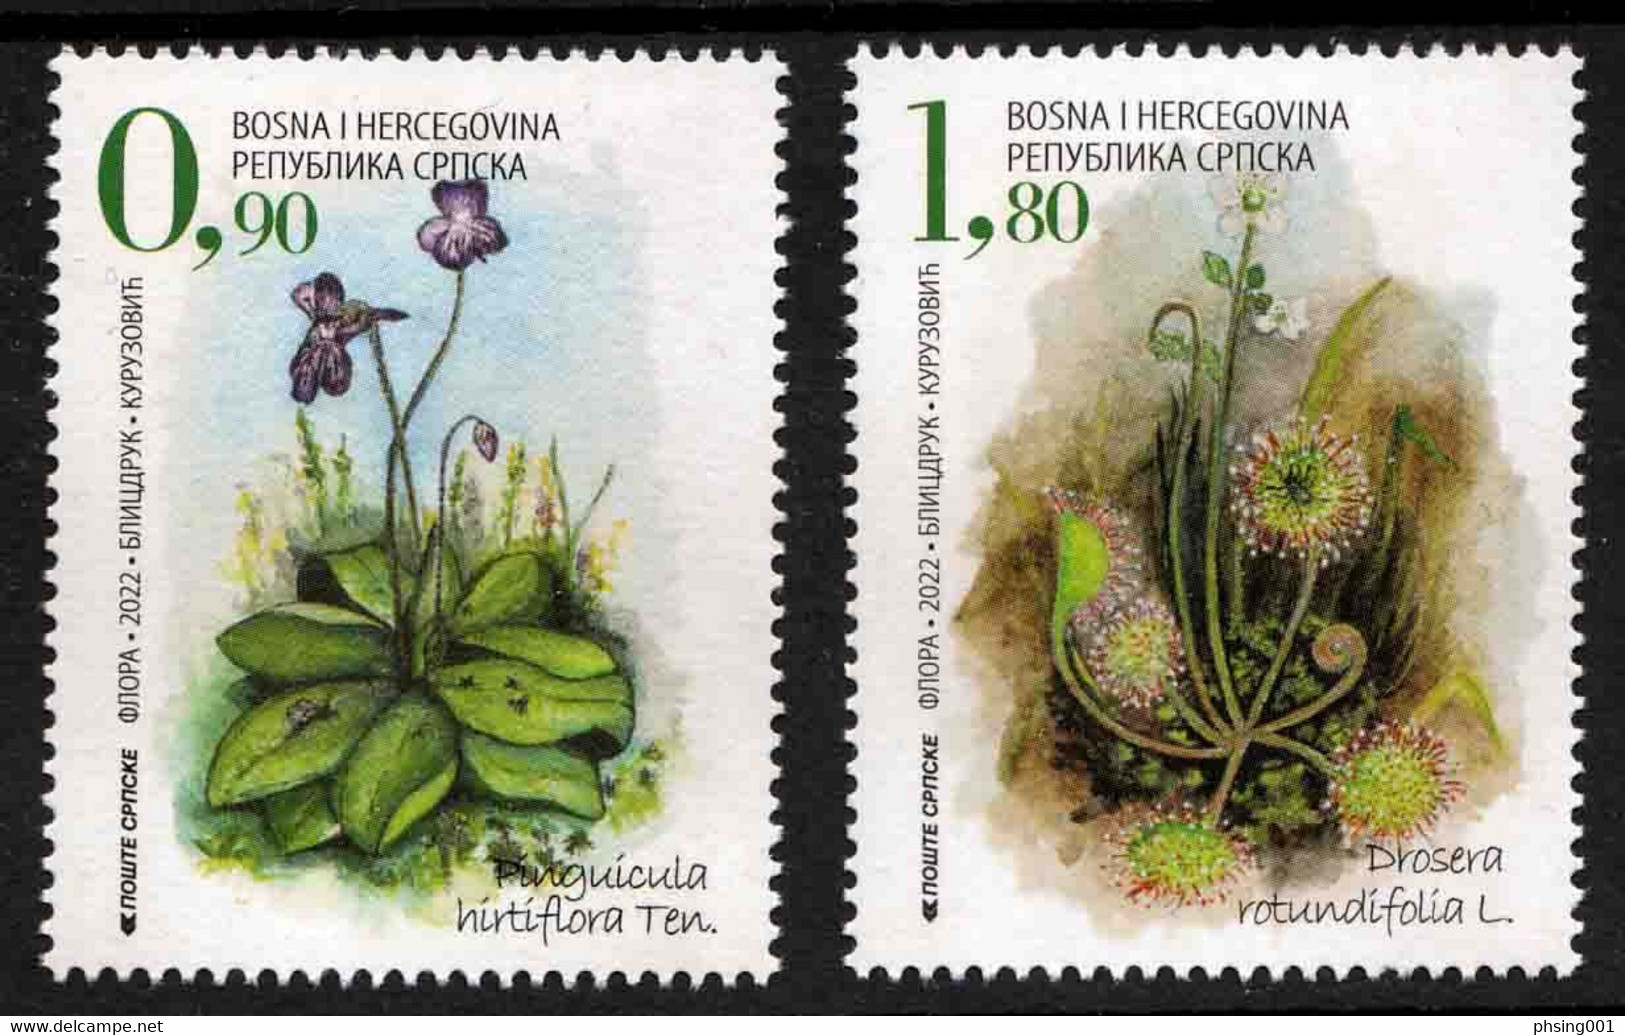 Bosnia Serbia 2022 Flora Flowers Carnivorous Plants Masnica Pinguicula Hirtiflora Ten. Drosera Rotundifolia L. Set MNH - Bosnia And Herzegovina